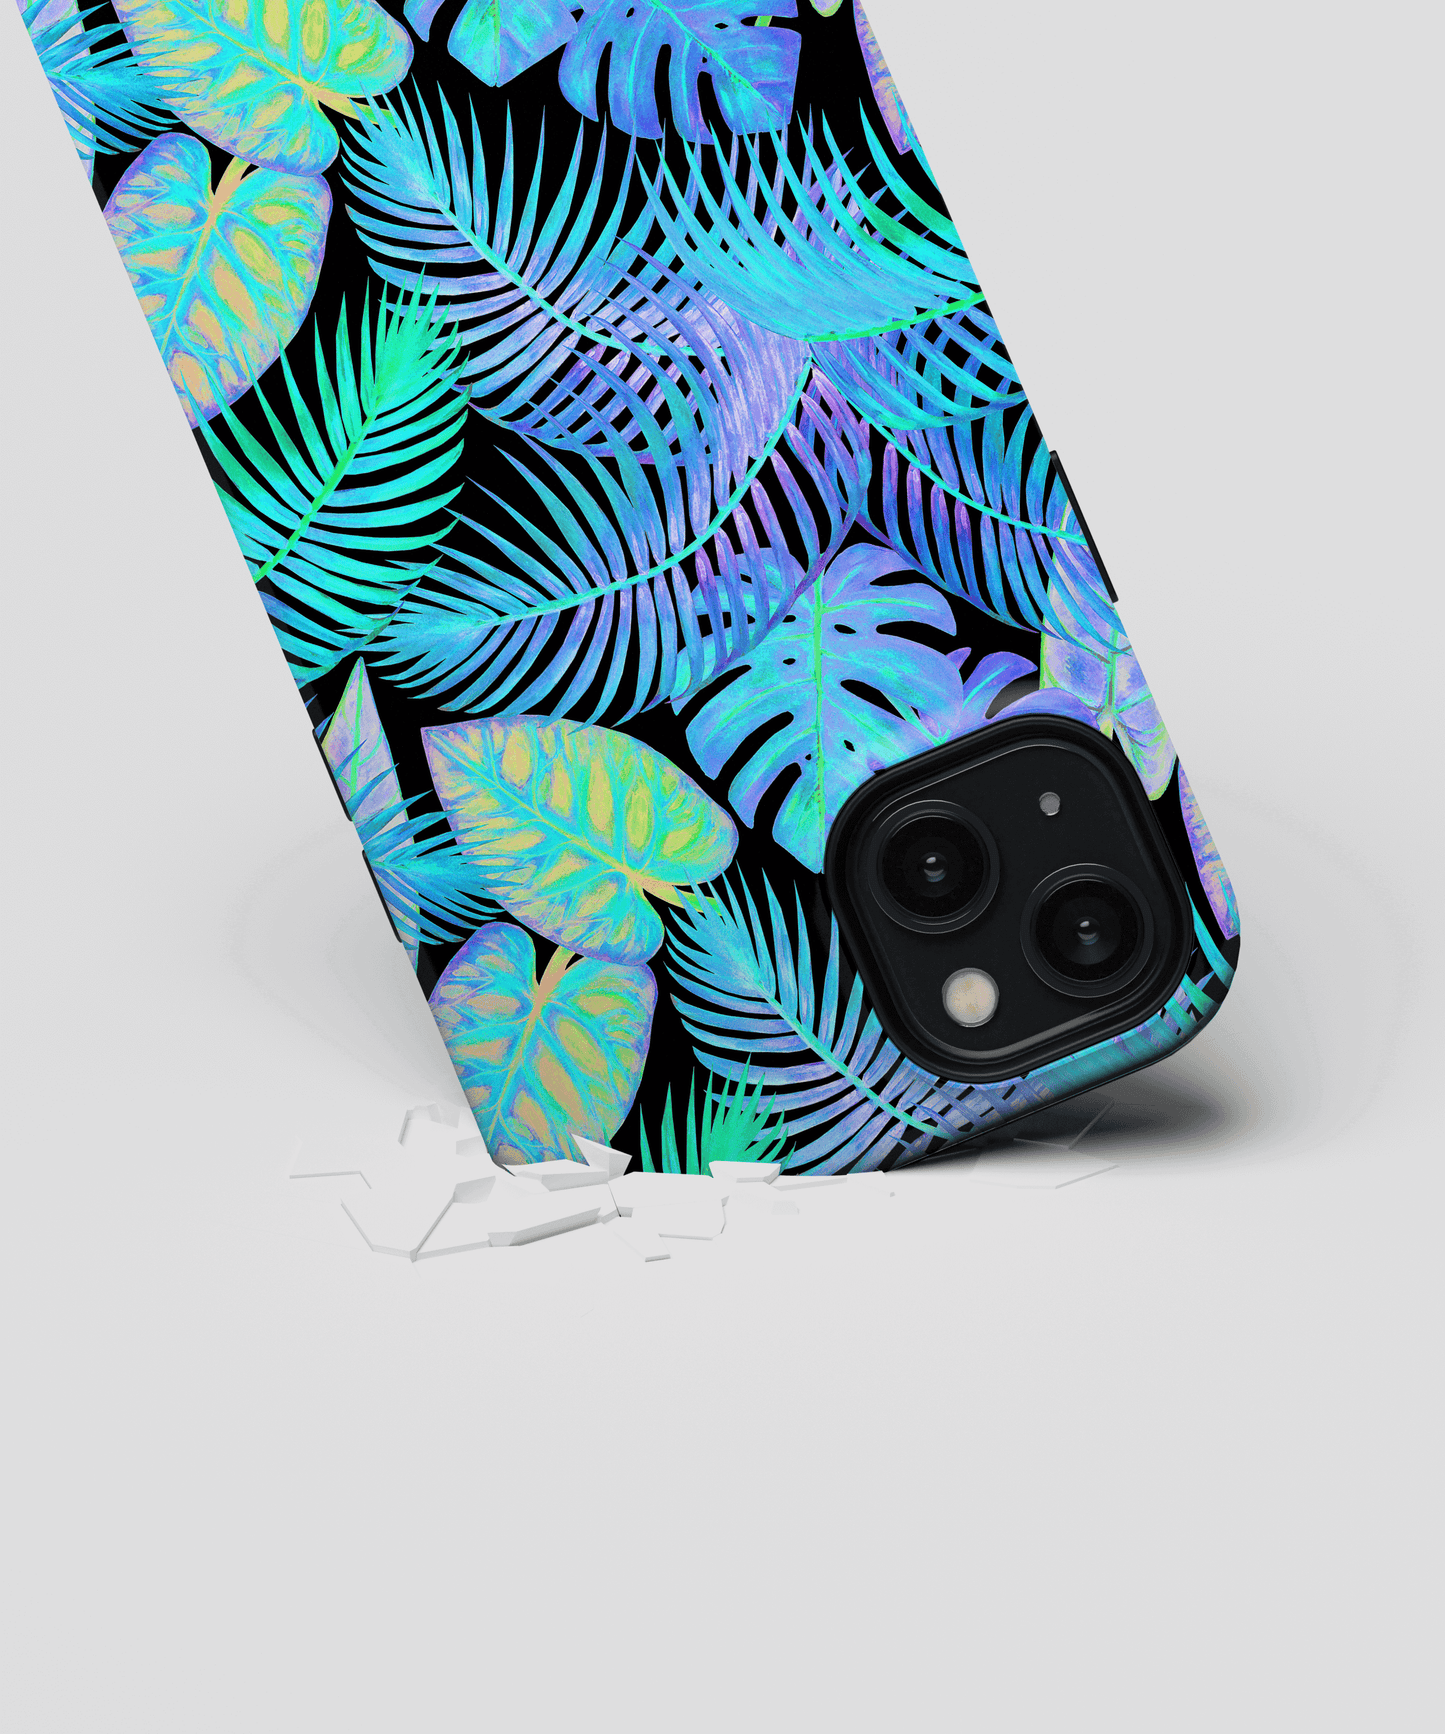 Tropic - Poco X3 phone case